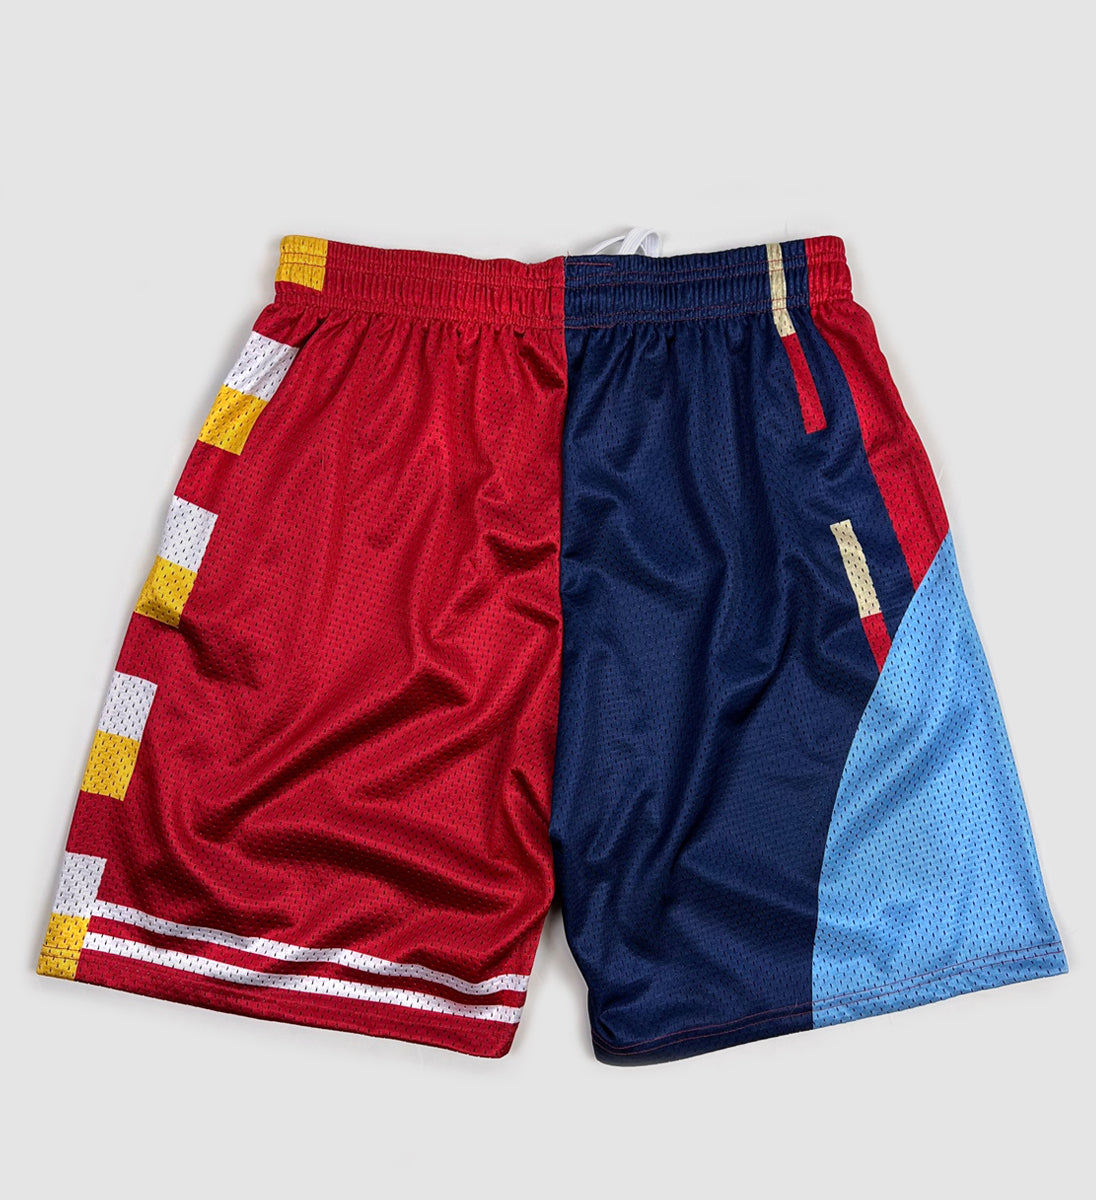 Cleveland Cavaliers Men's Nike NBA Mesh Shorts